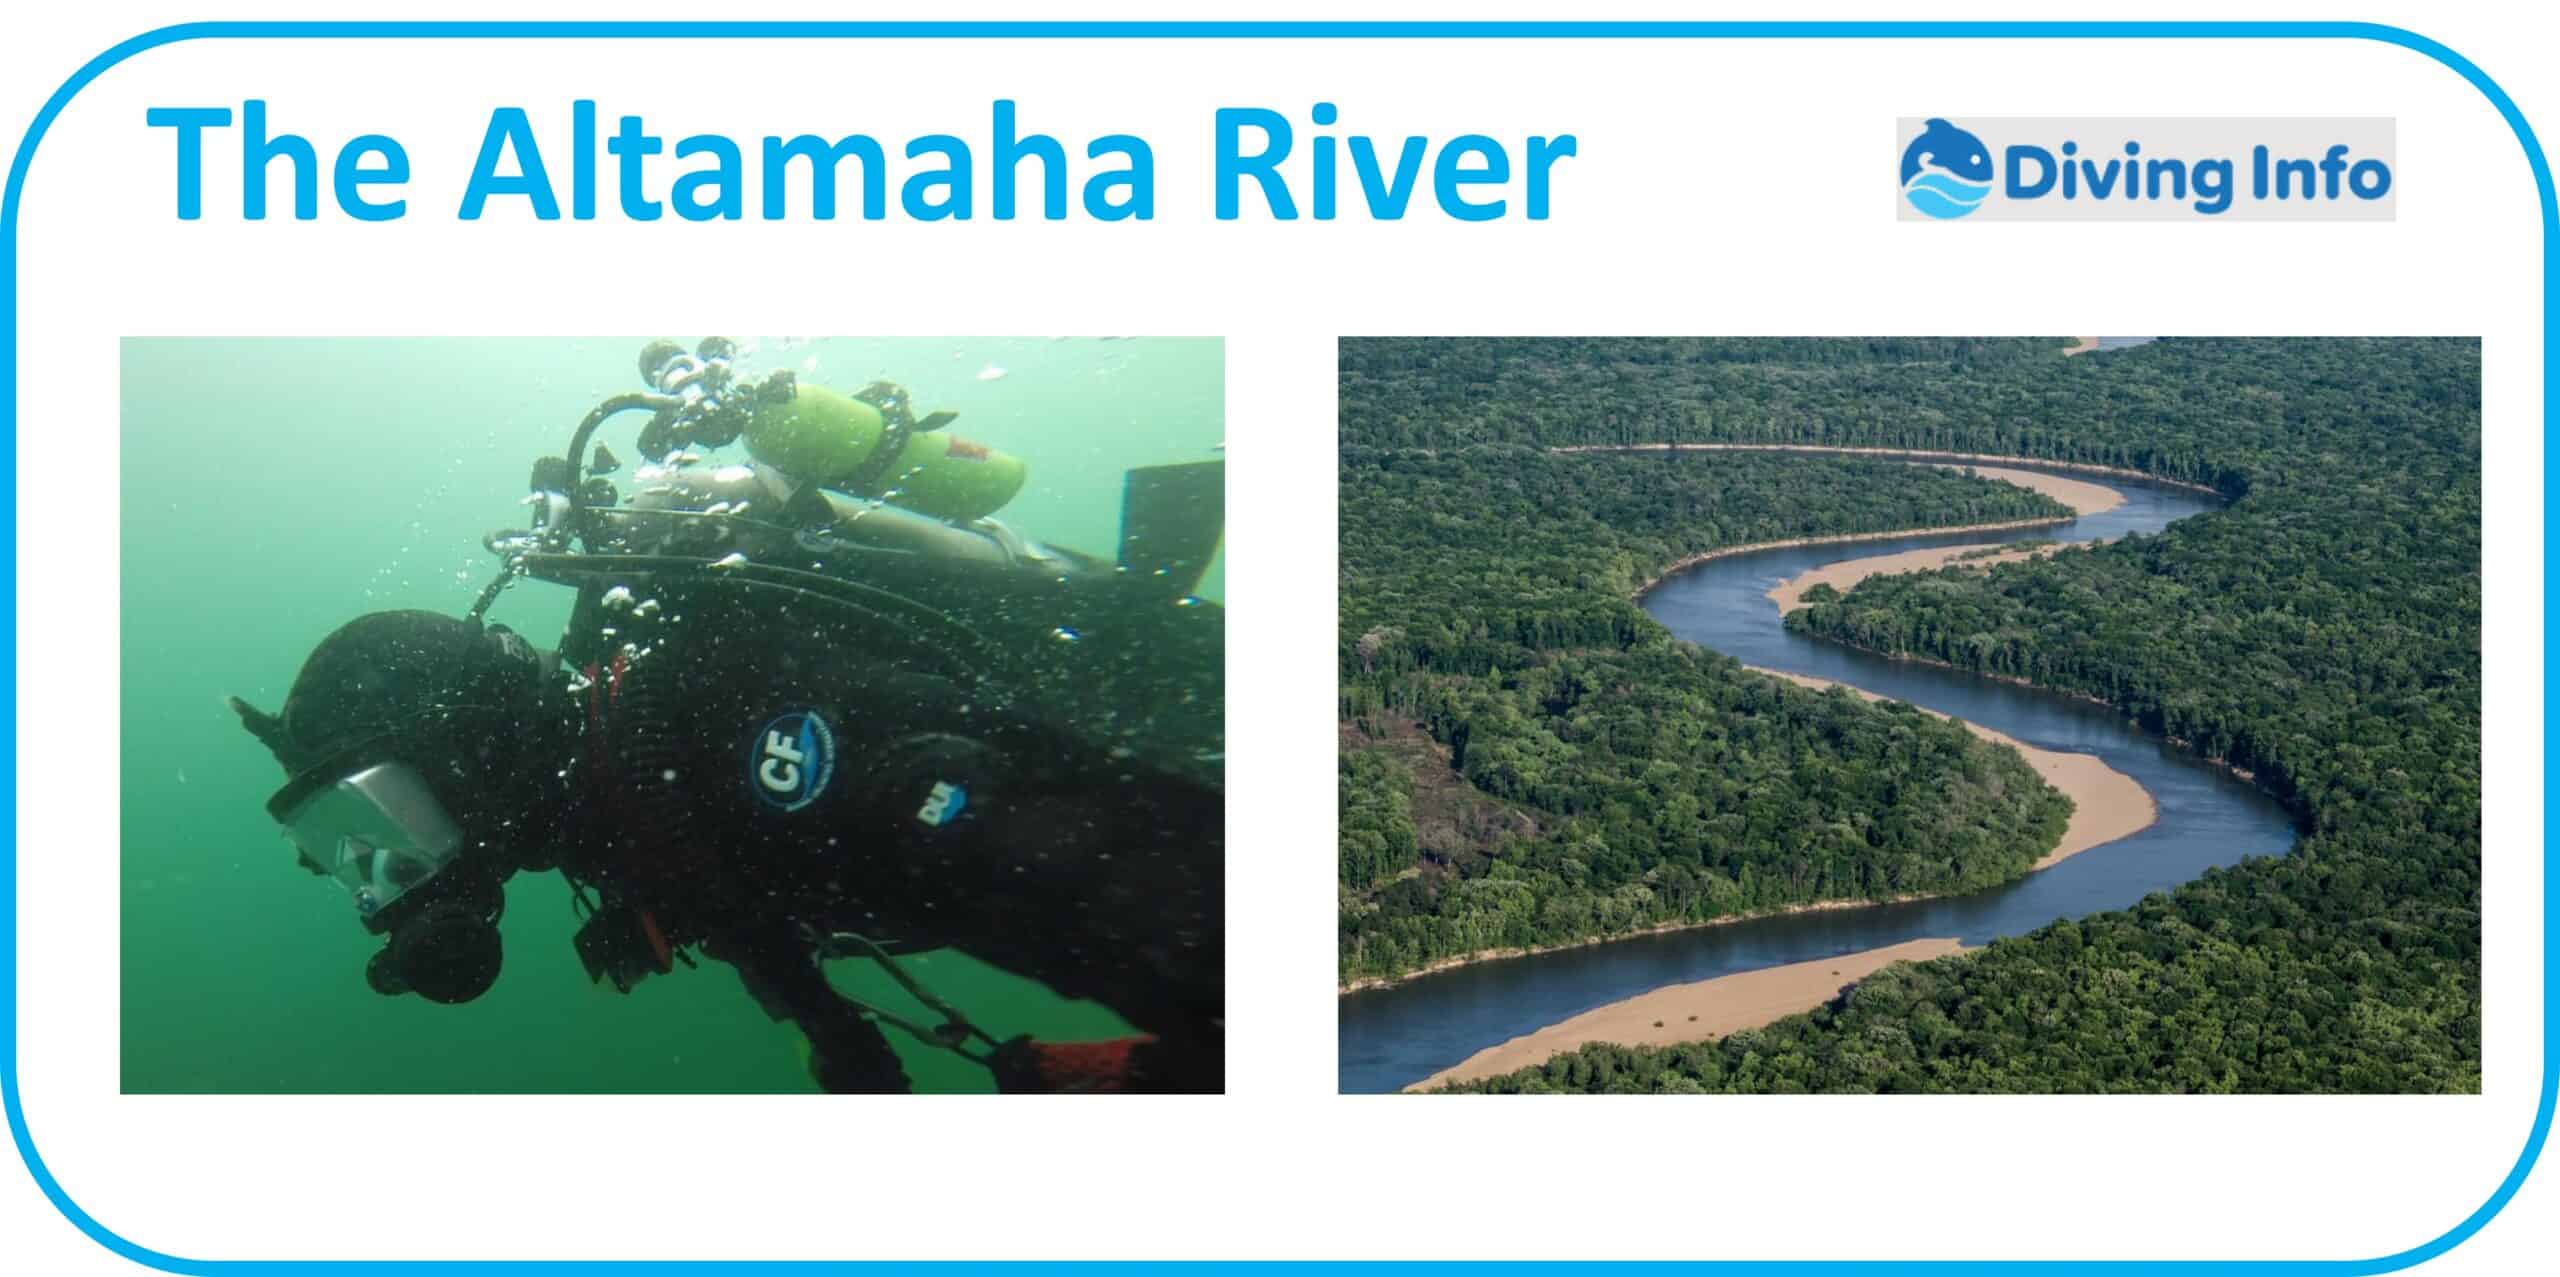 Diving The Altamaha River